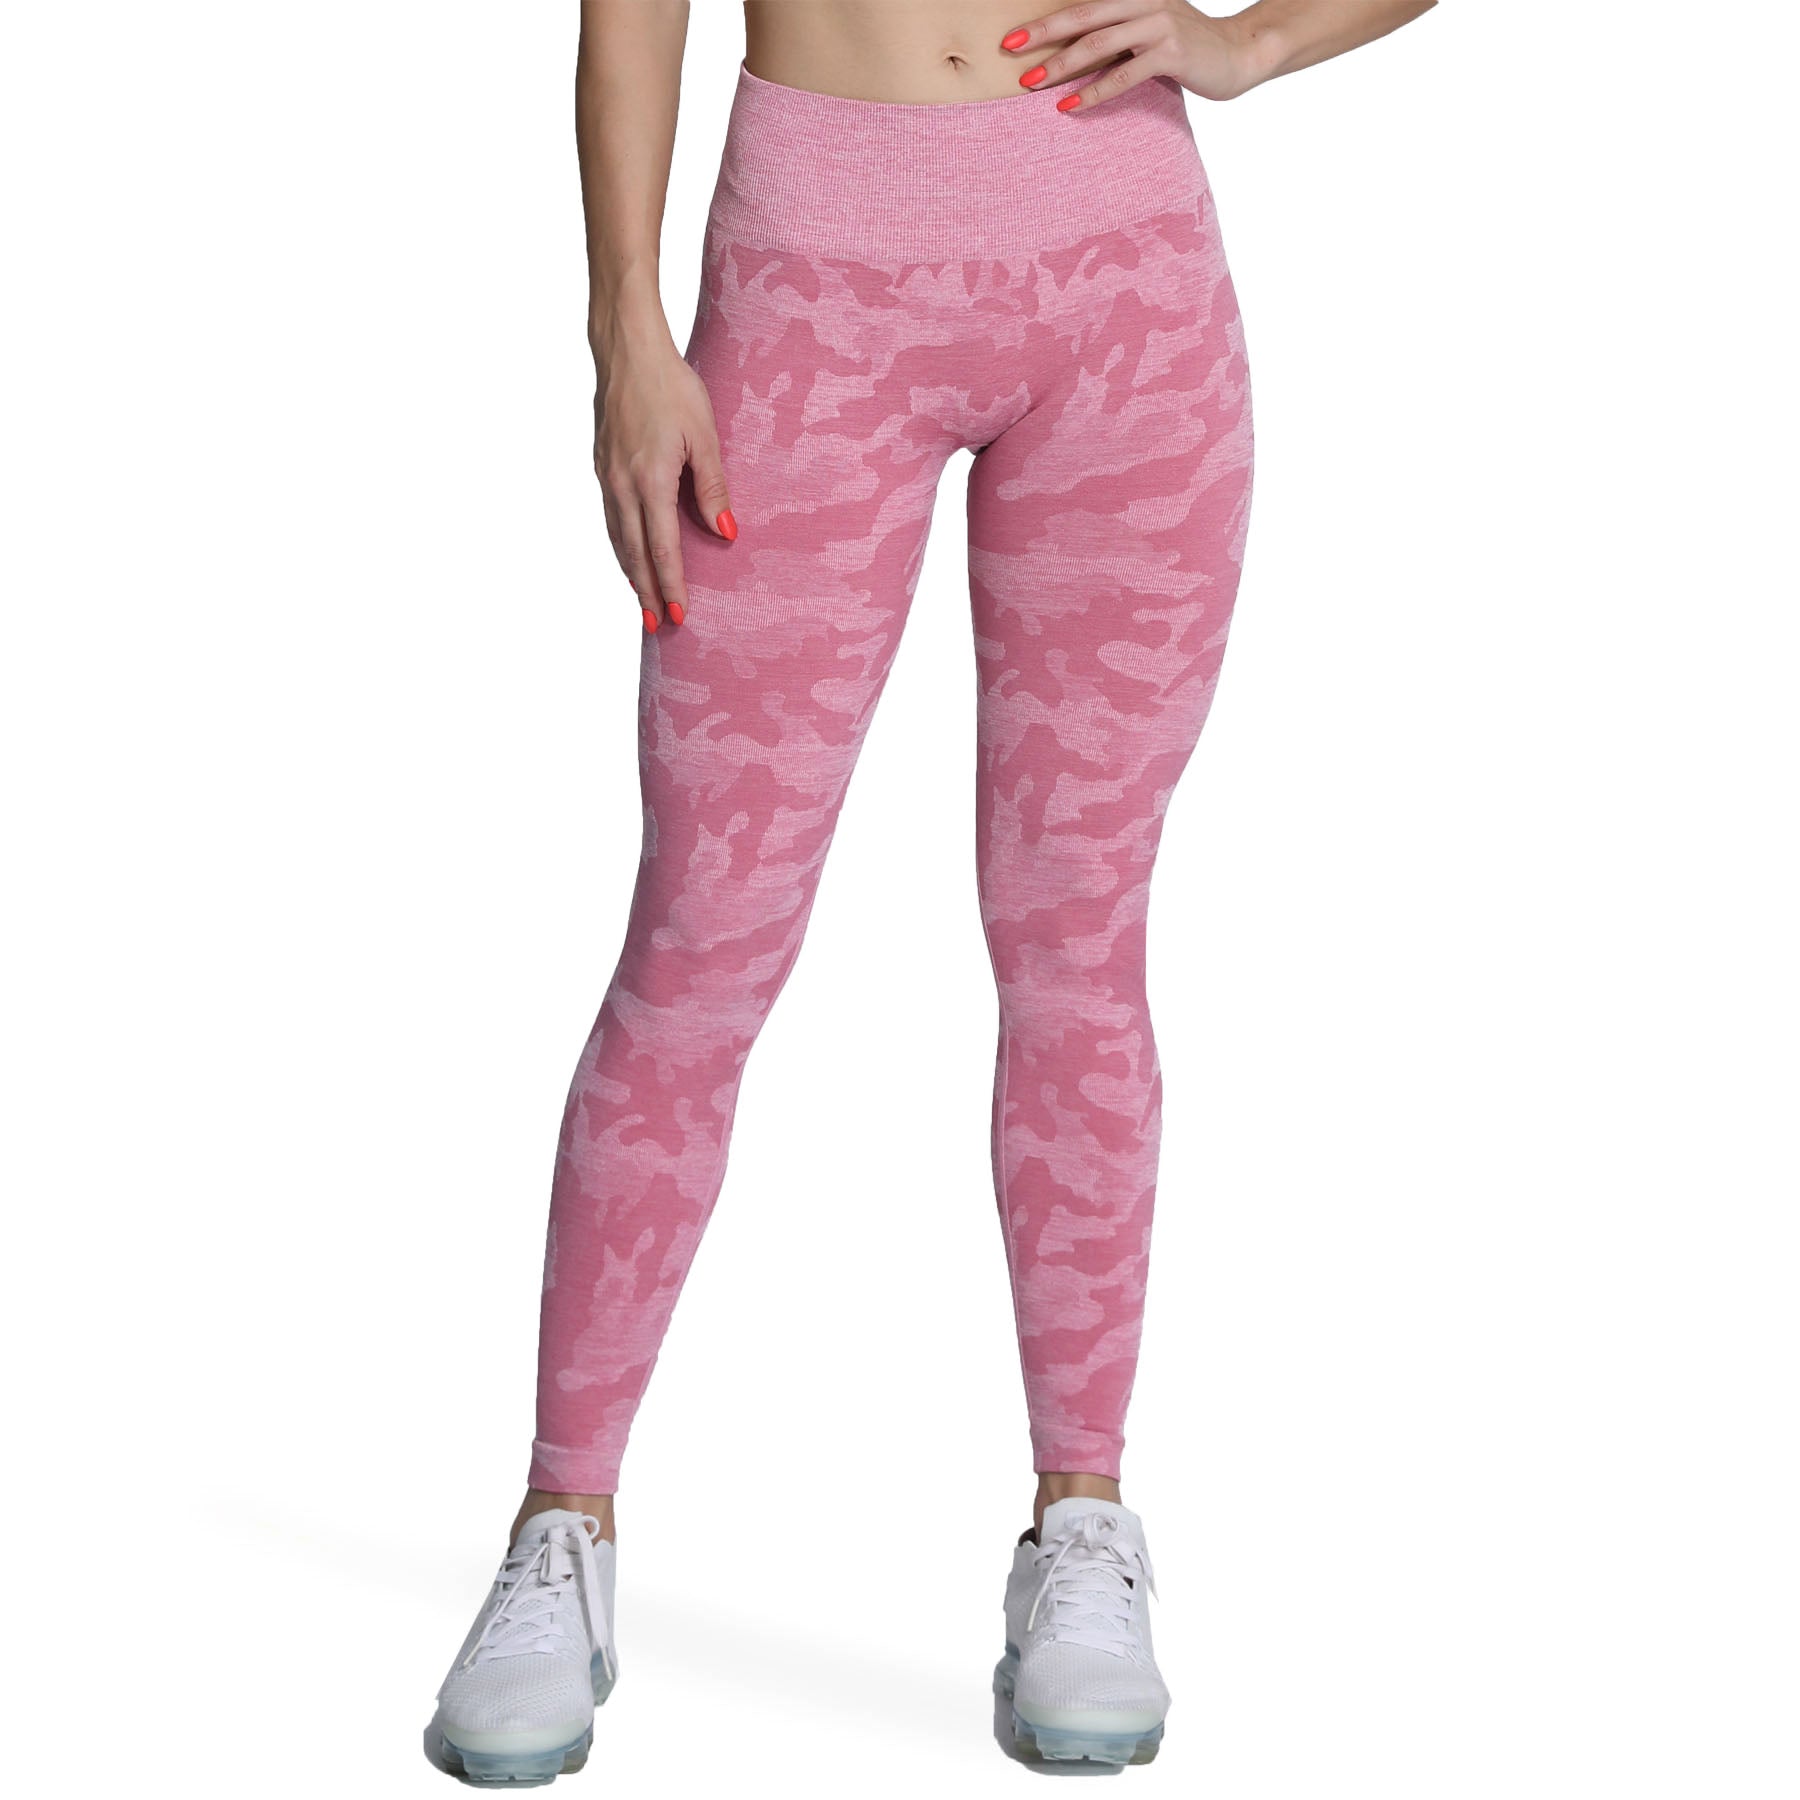 Youth Pink Camouflage Leggings, Girls Leggings, Printed Leggings, Camo  Leggings, Optional Matching Scrunchie or Headband 